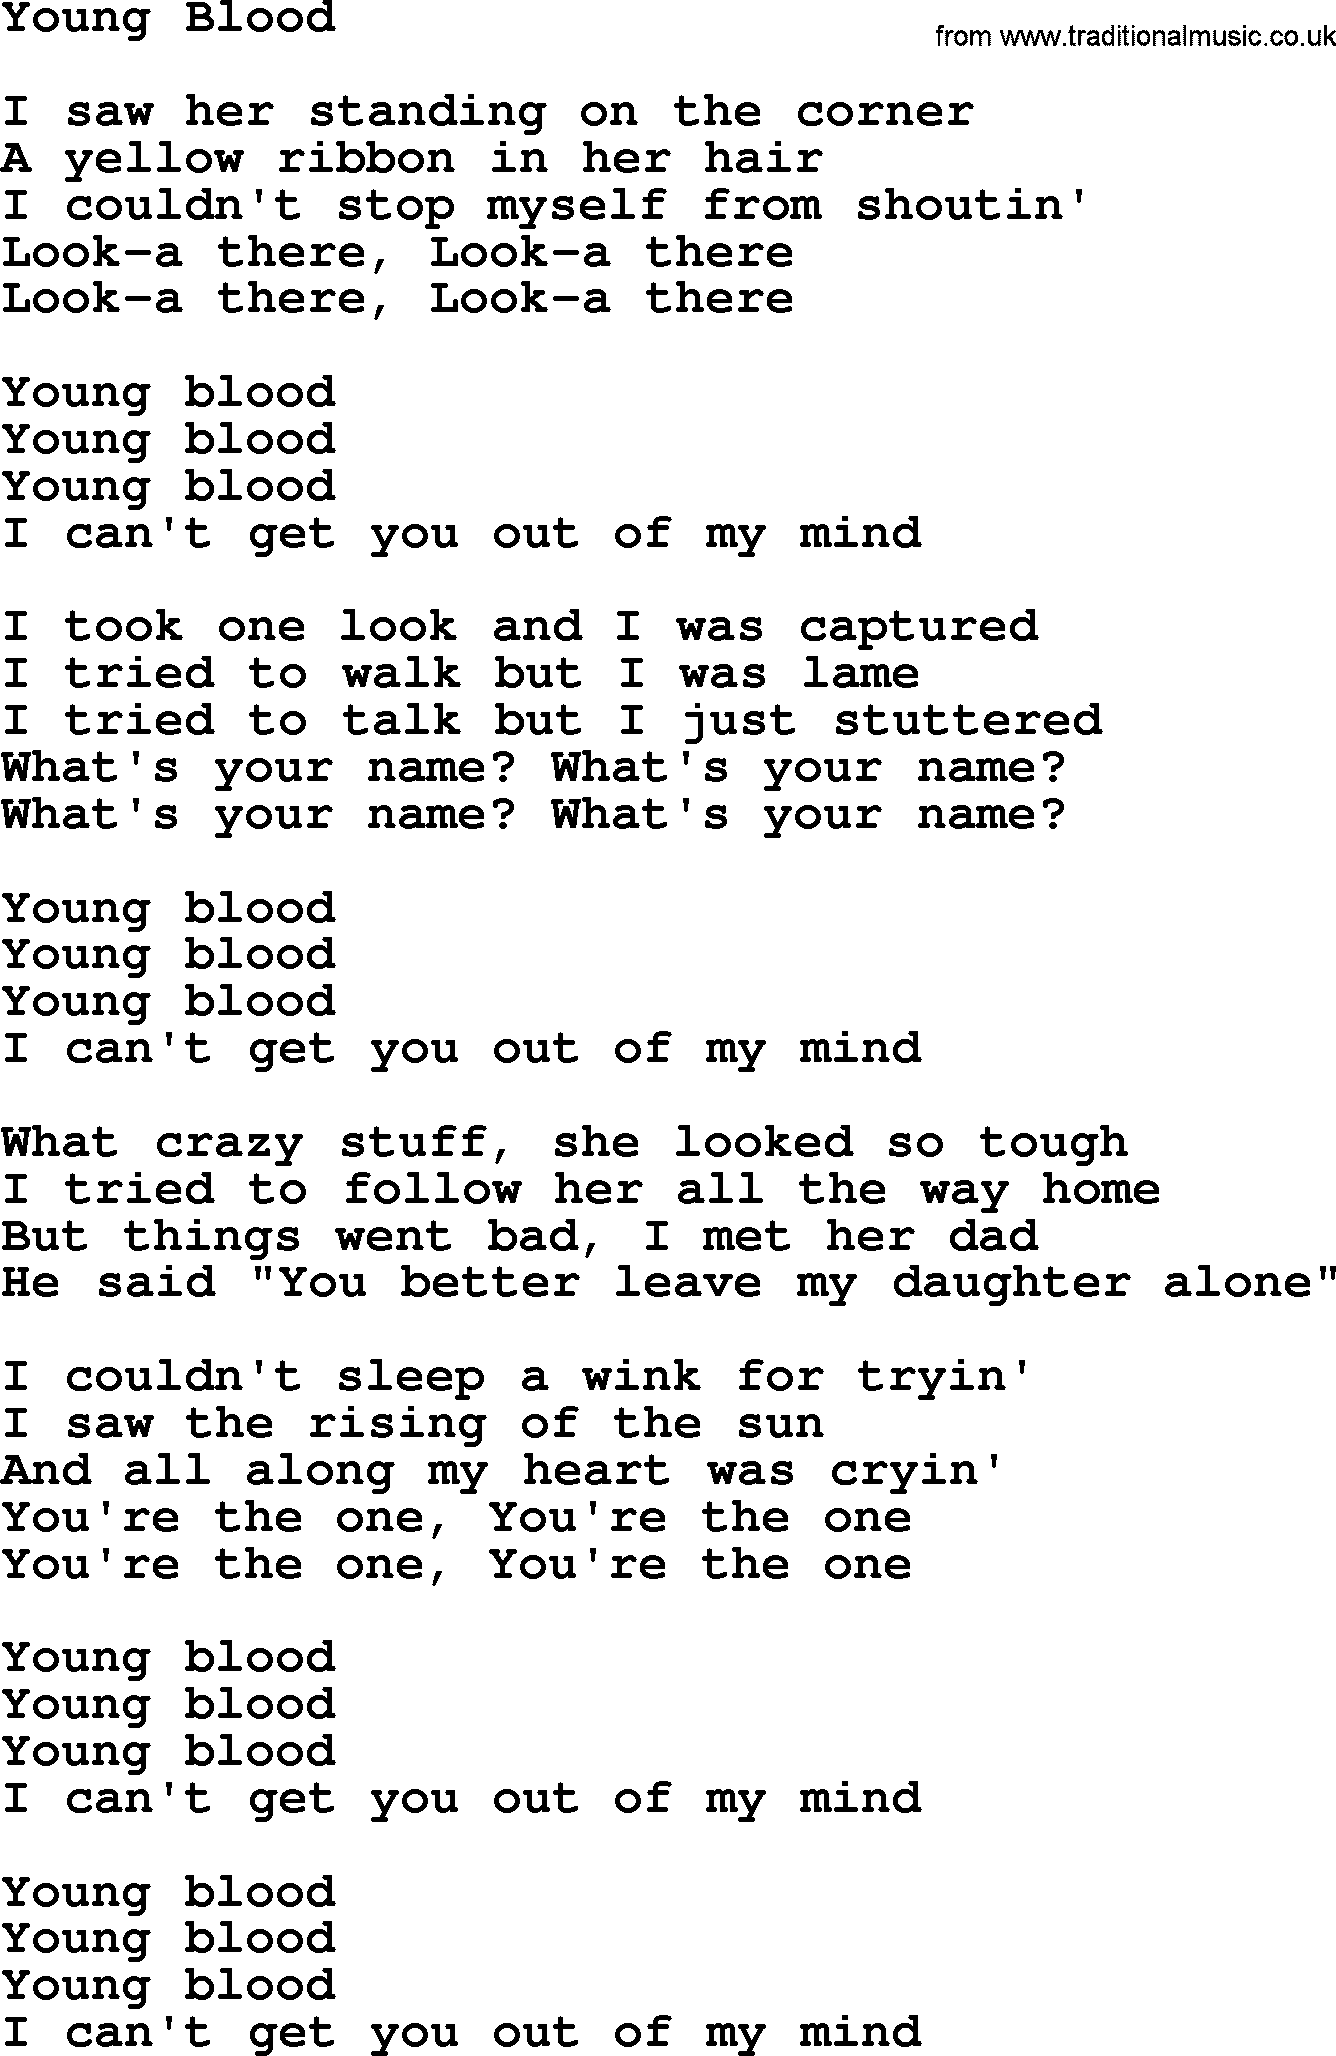 Joan Baez song Young Blood, lyrics